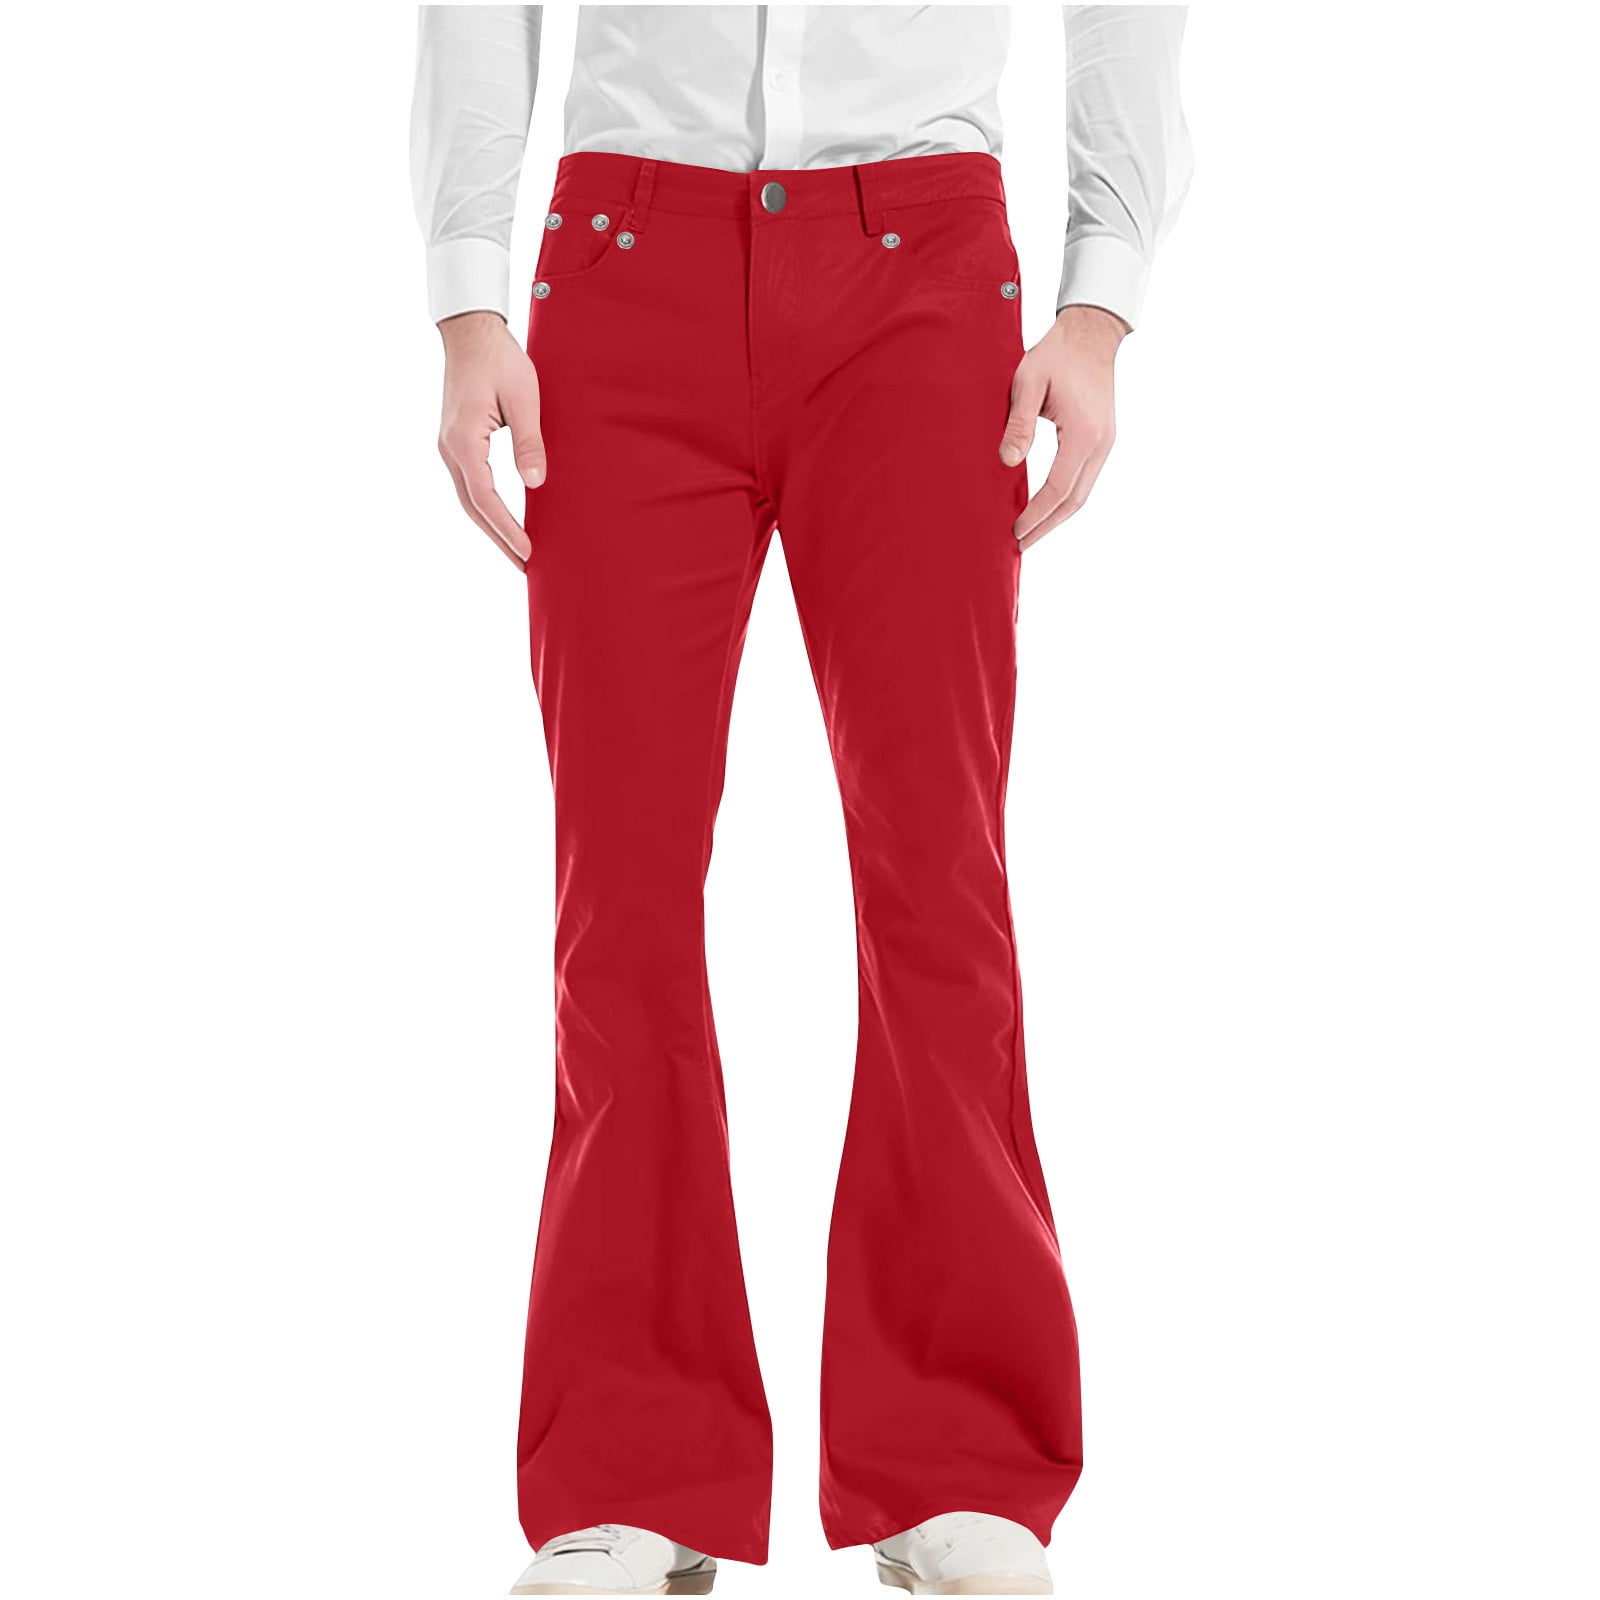 AherBiu Mens Vintage Flare Pants High Waisted Solid Color Retro Bell Bottom  Pants for Men Solid Color - Walmart.com